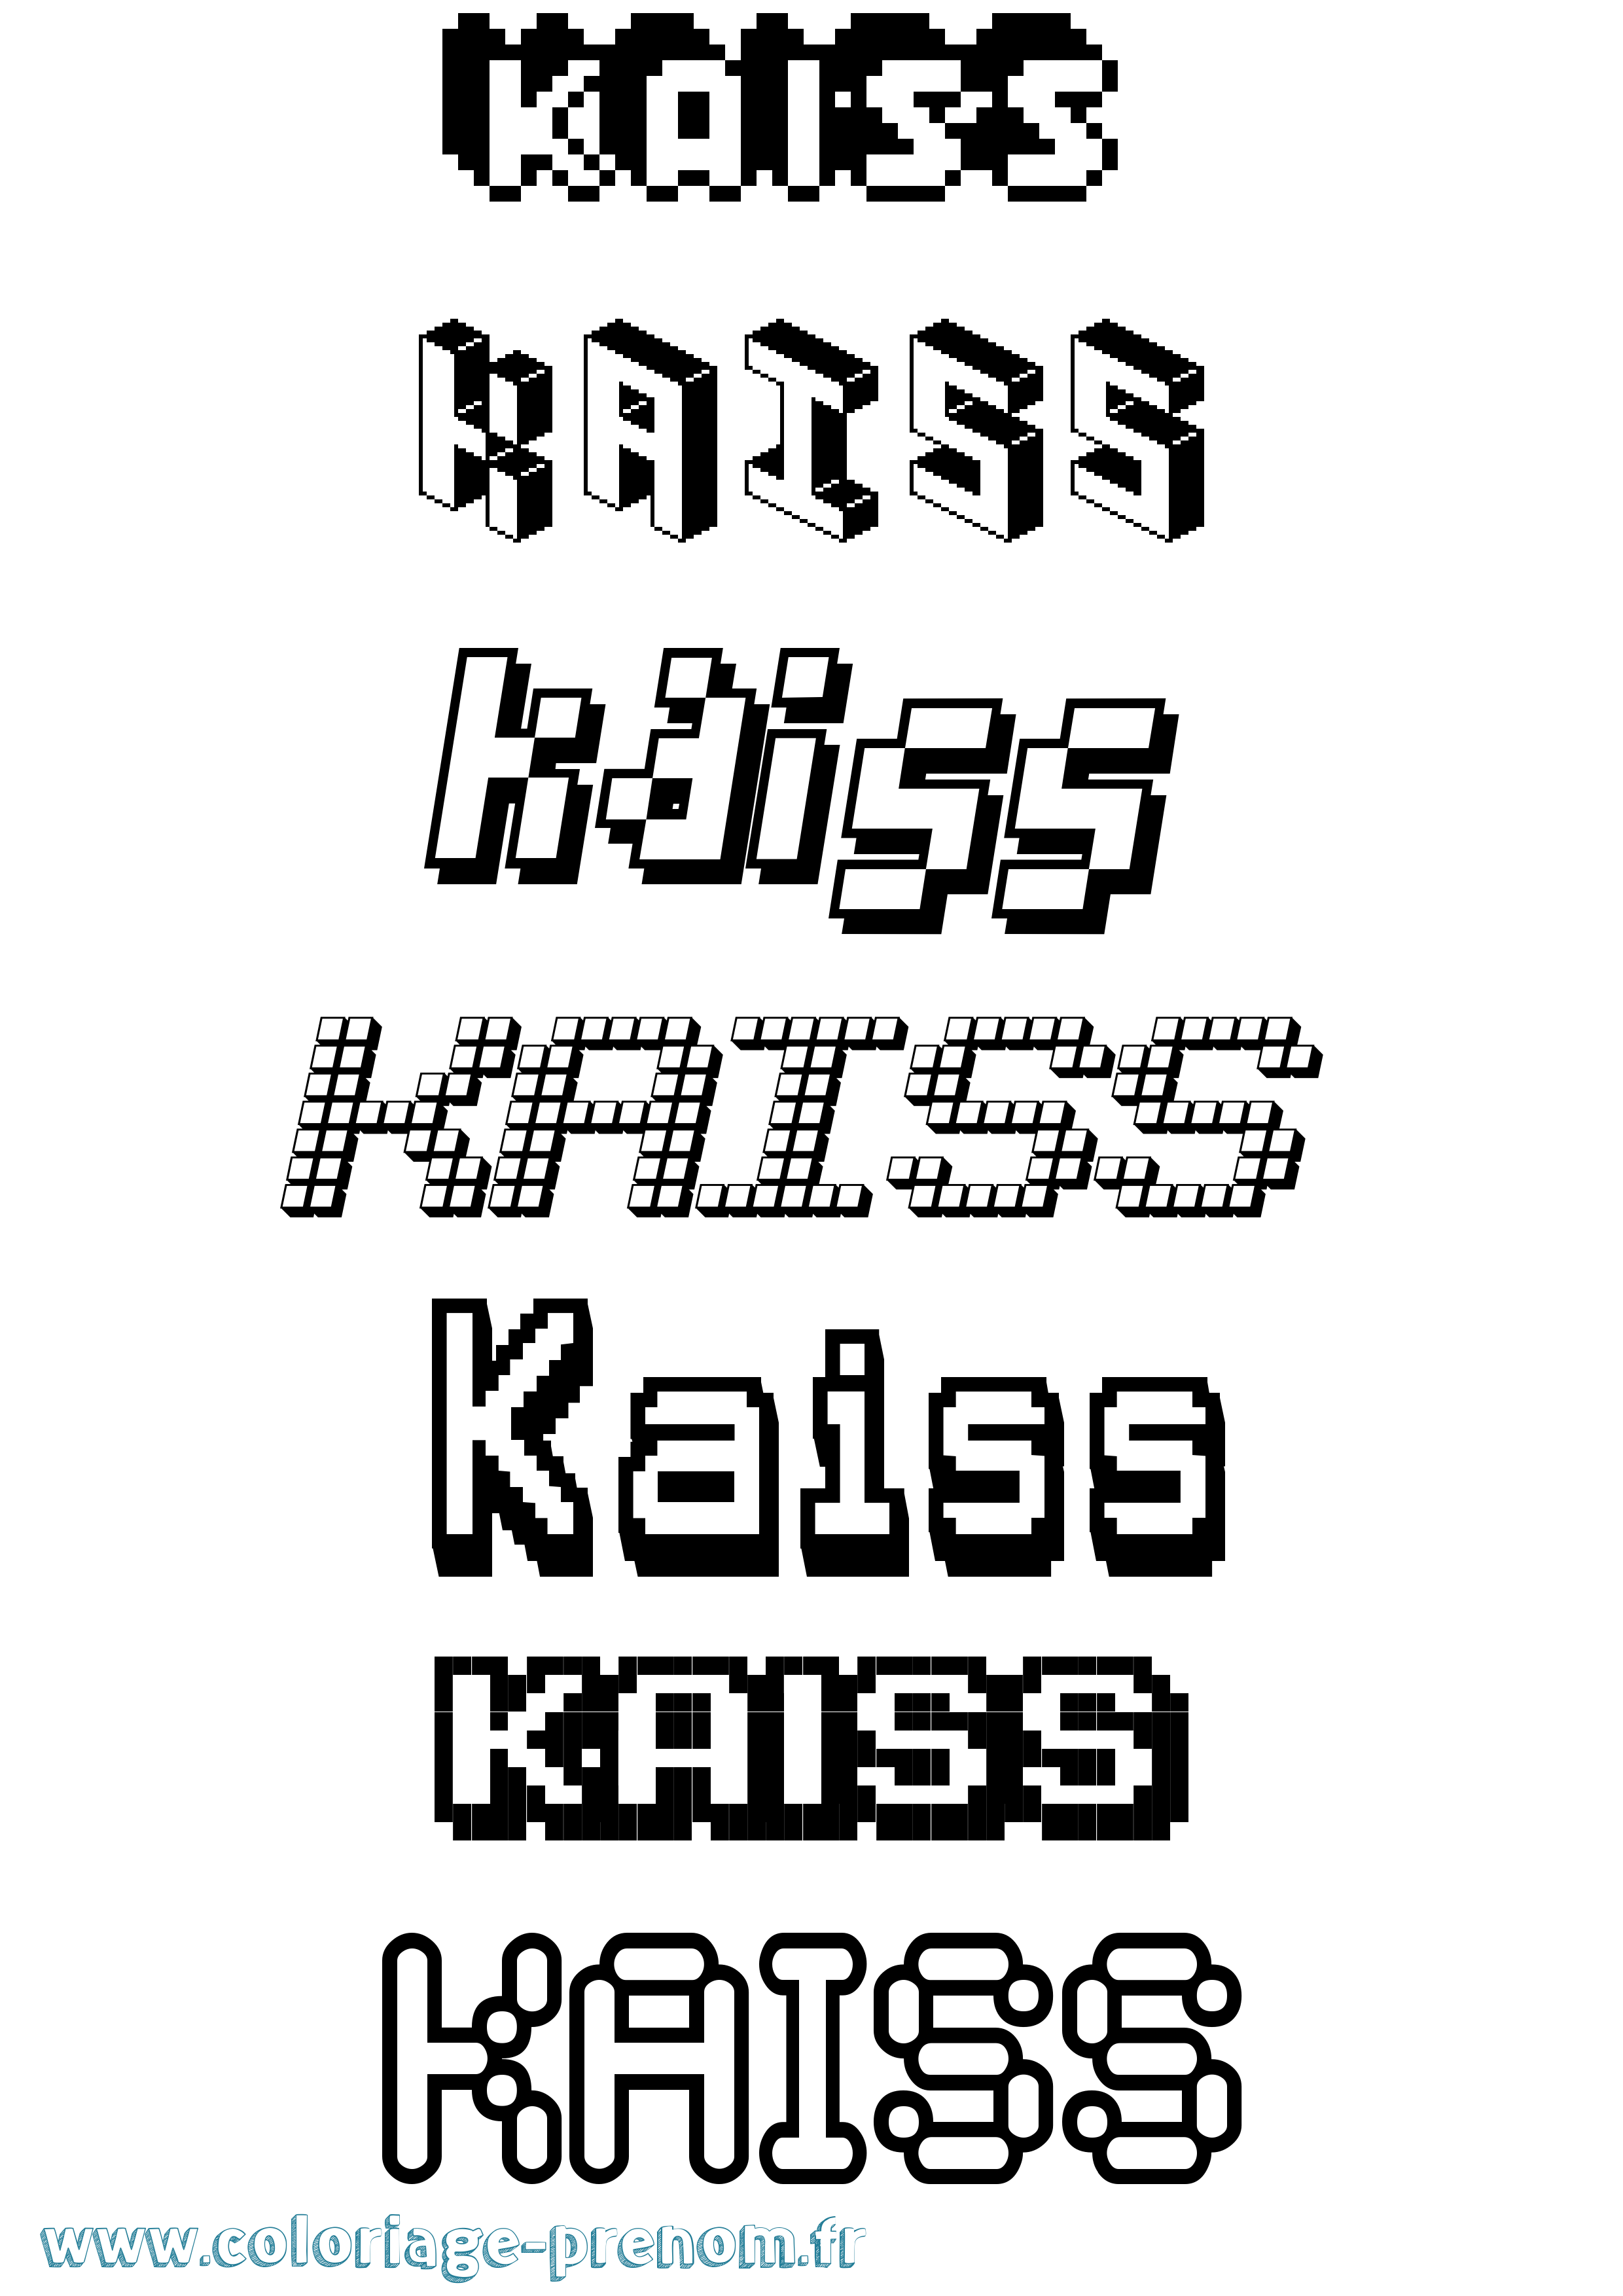 Coloriage prénom Kaiss Pixel